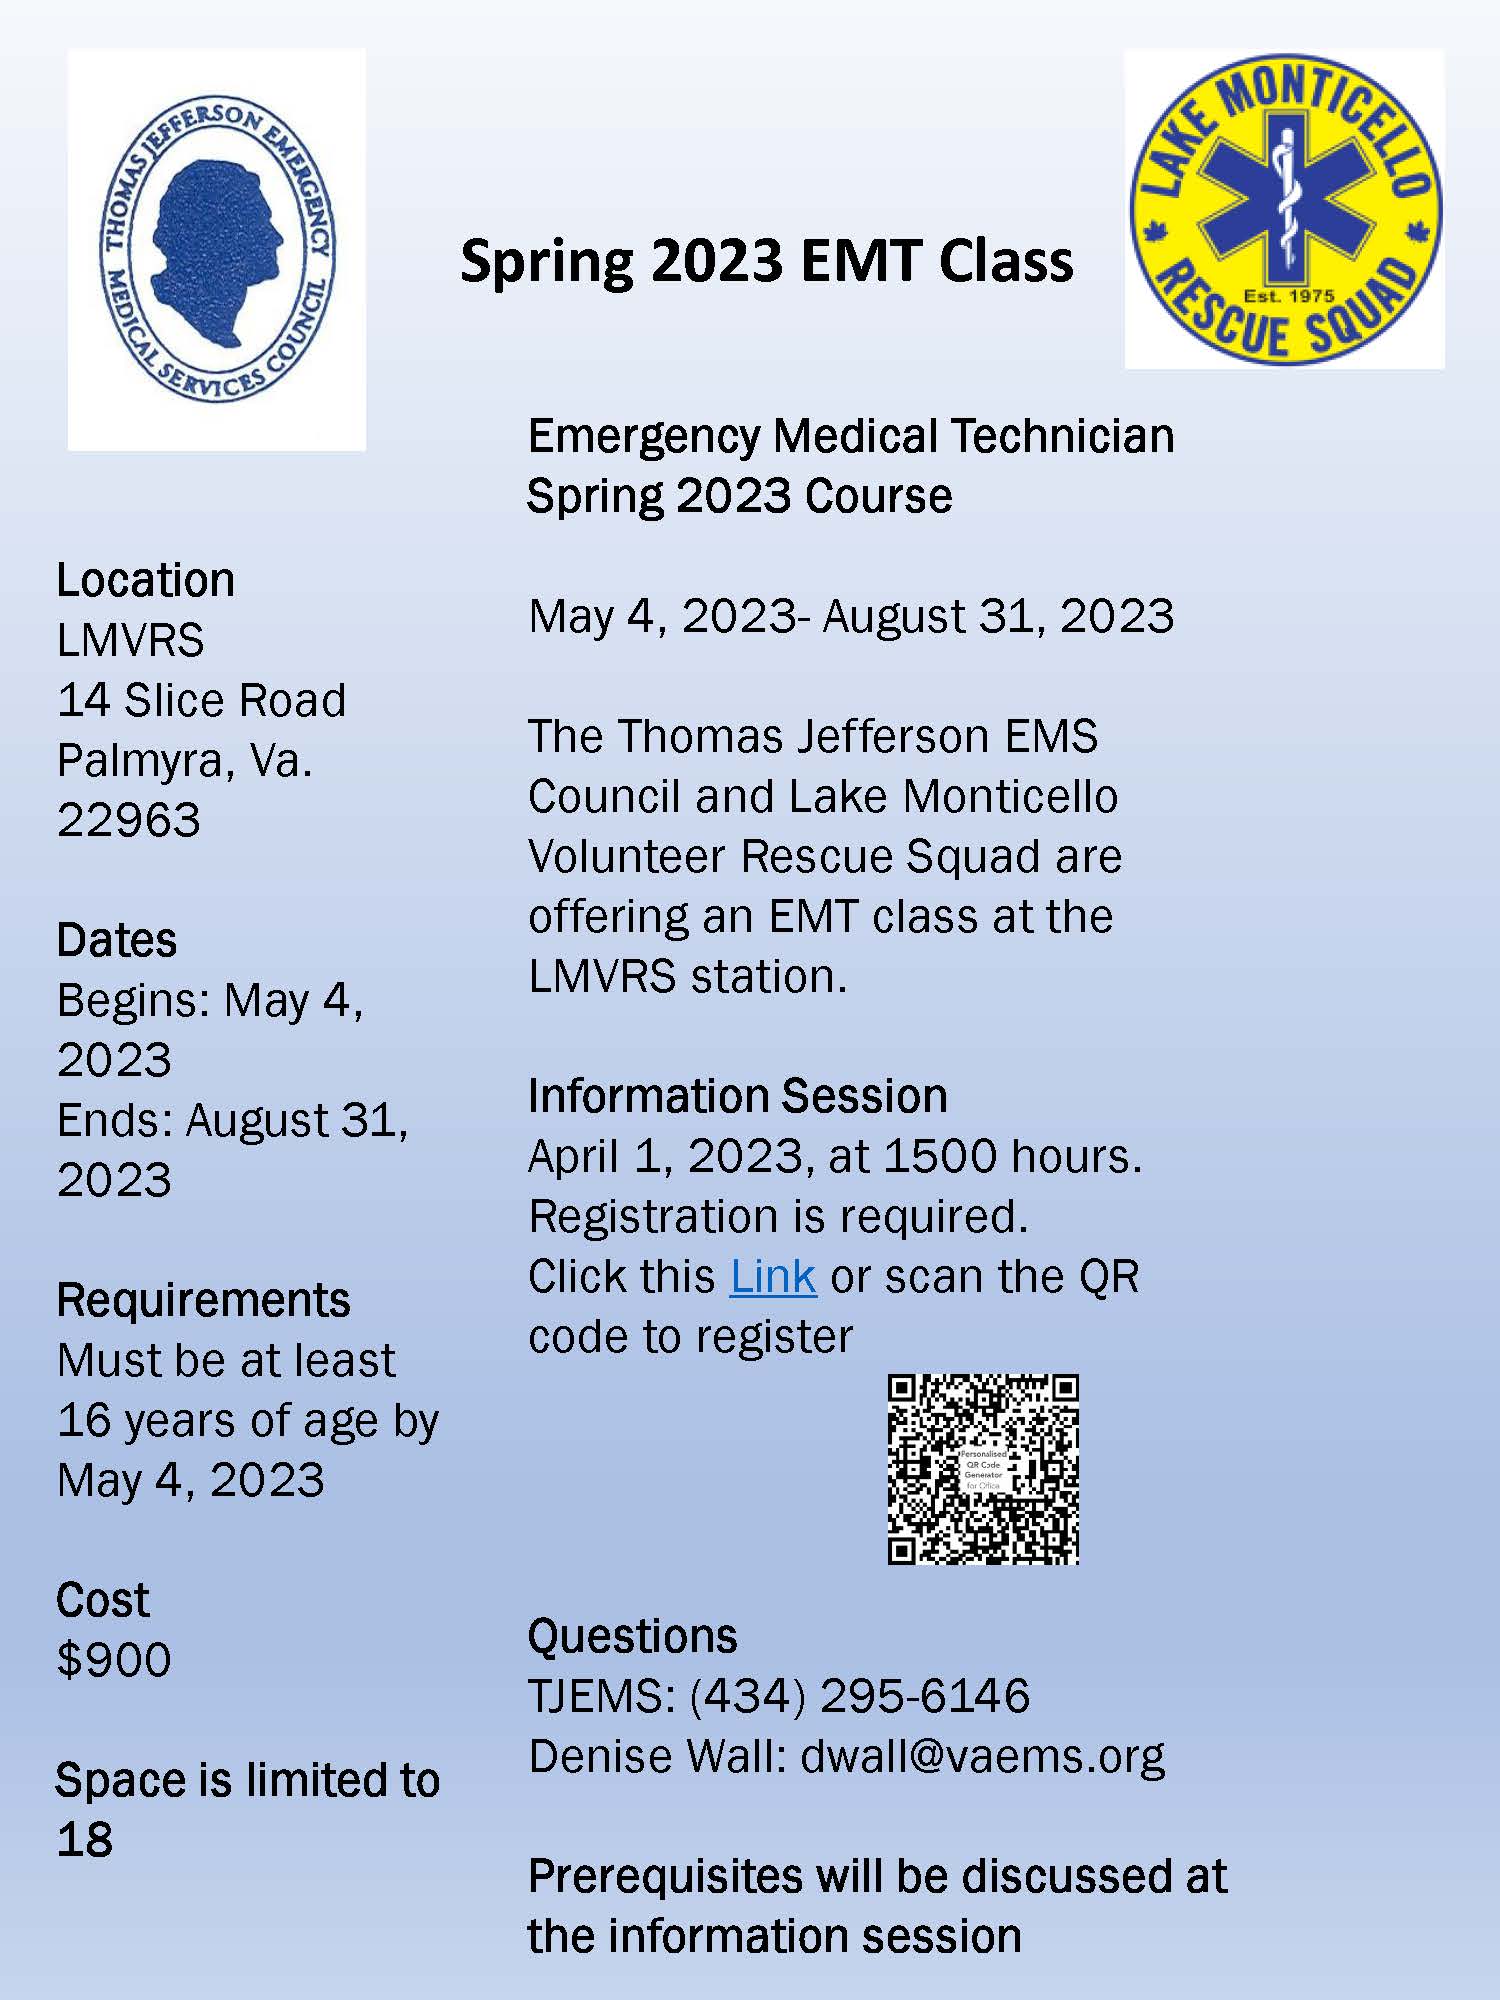 Spring 2023 EMT Class Flyer